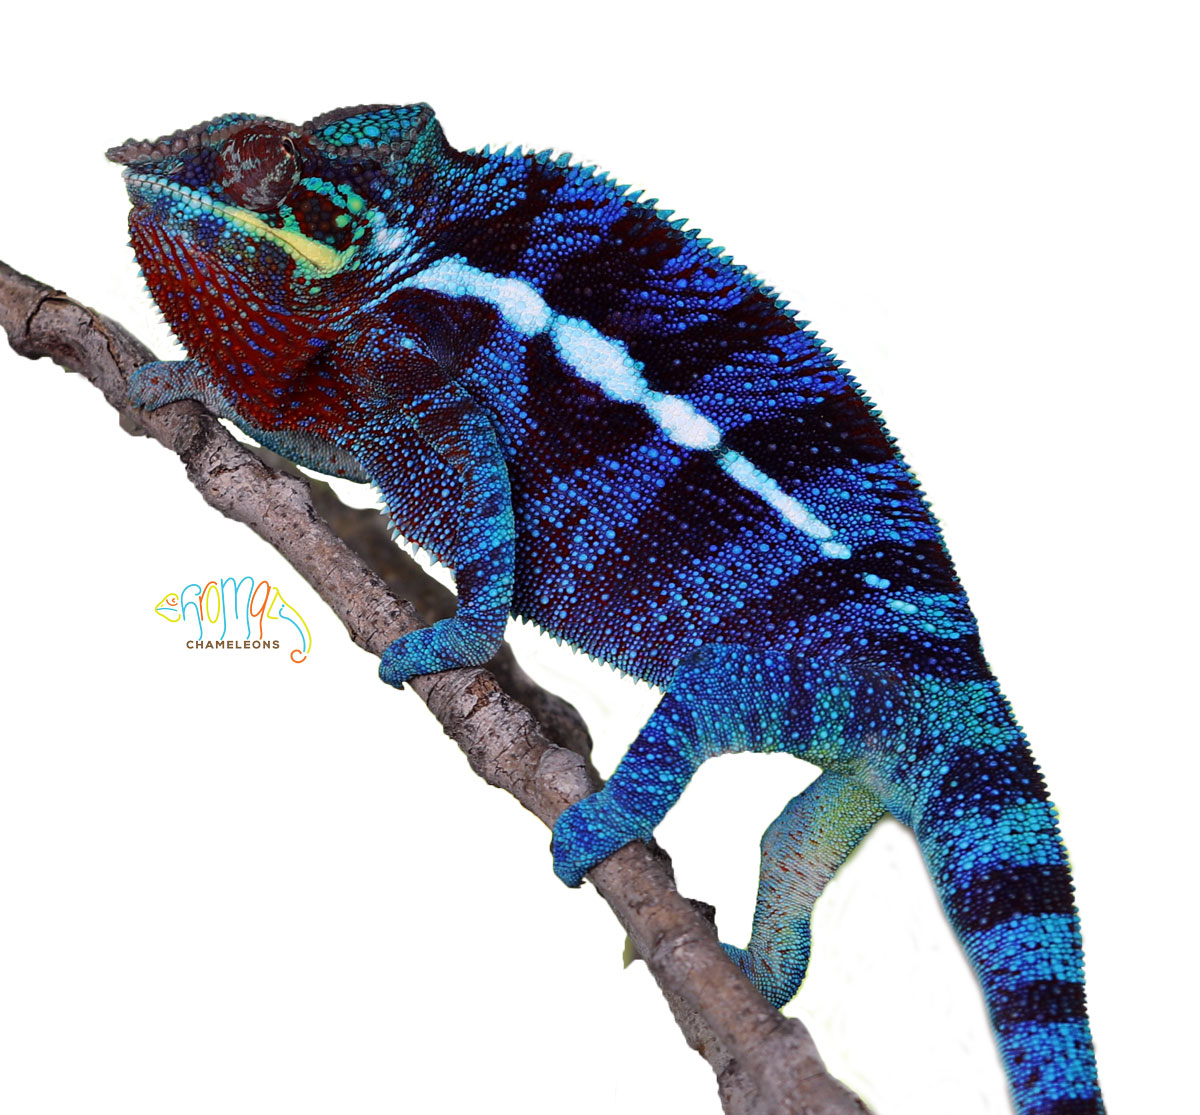 Blurple Ambanja Panther Chameleon for Sale